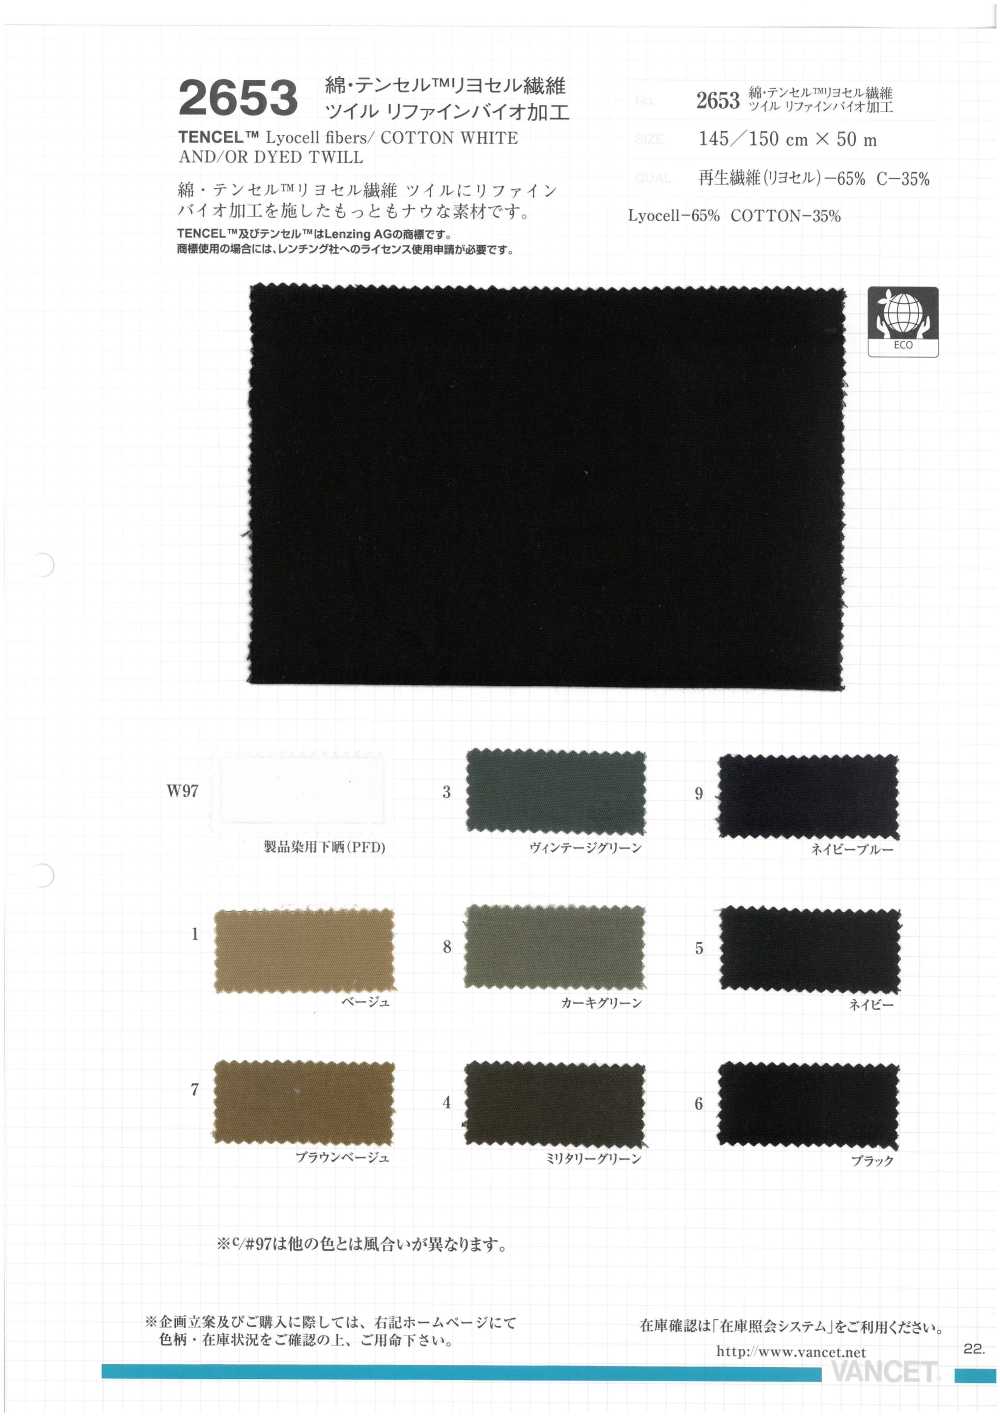 2653 Algodón/Tencel(TM) Lyocell Fiber Twill Refinado Procesamiento Biológico[Fabrica Textil] VANCET